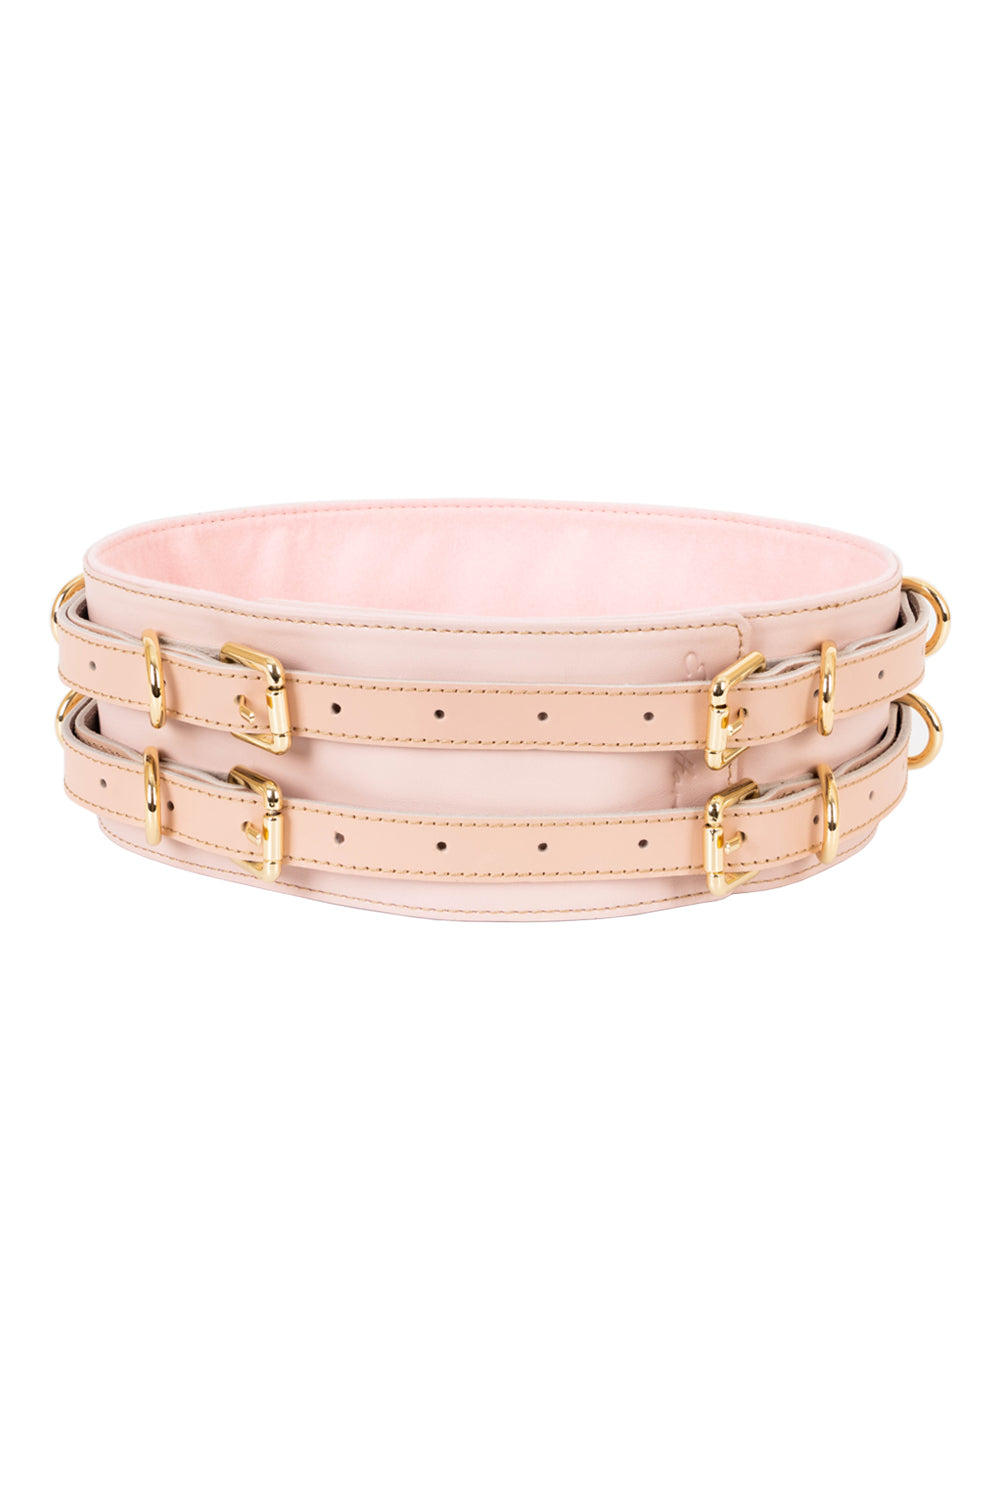 Leather Waist Belt. Pink